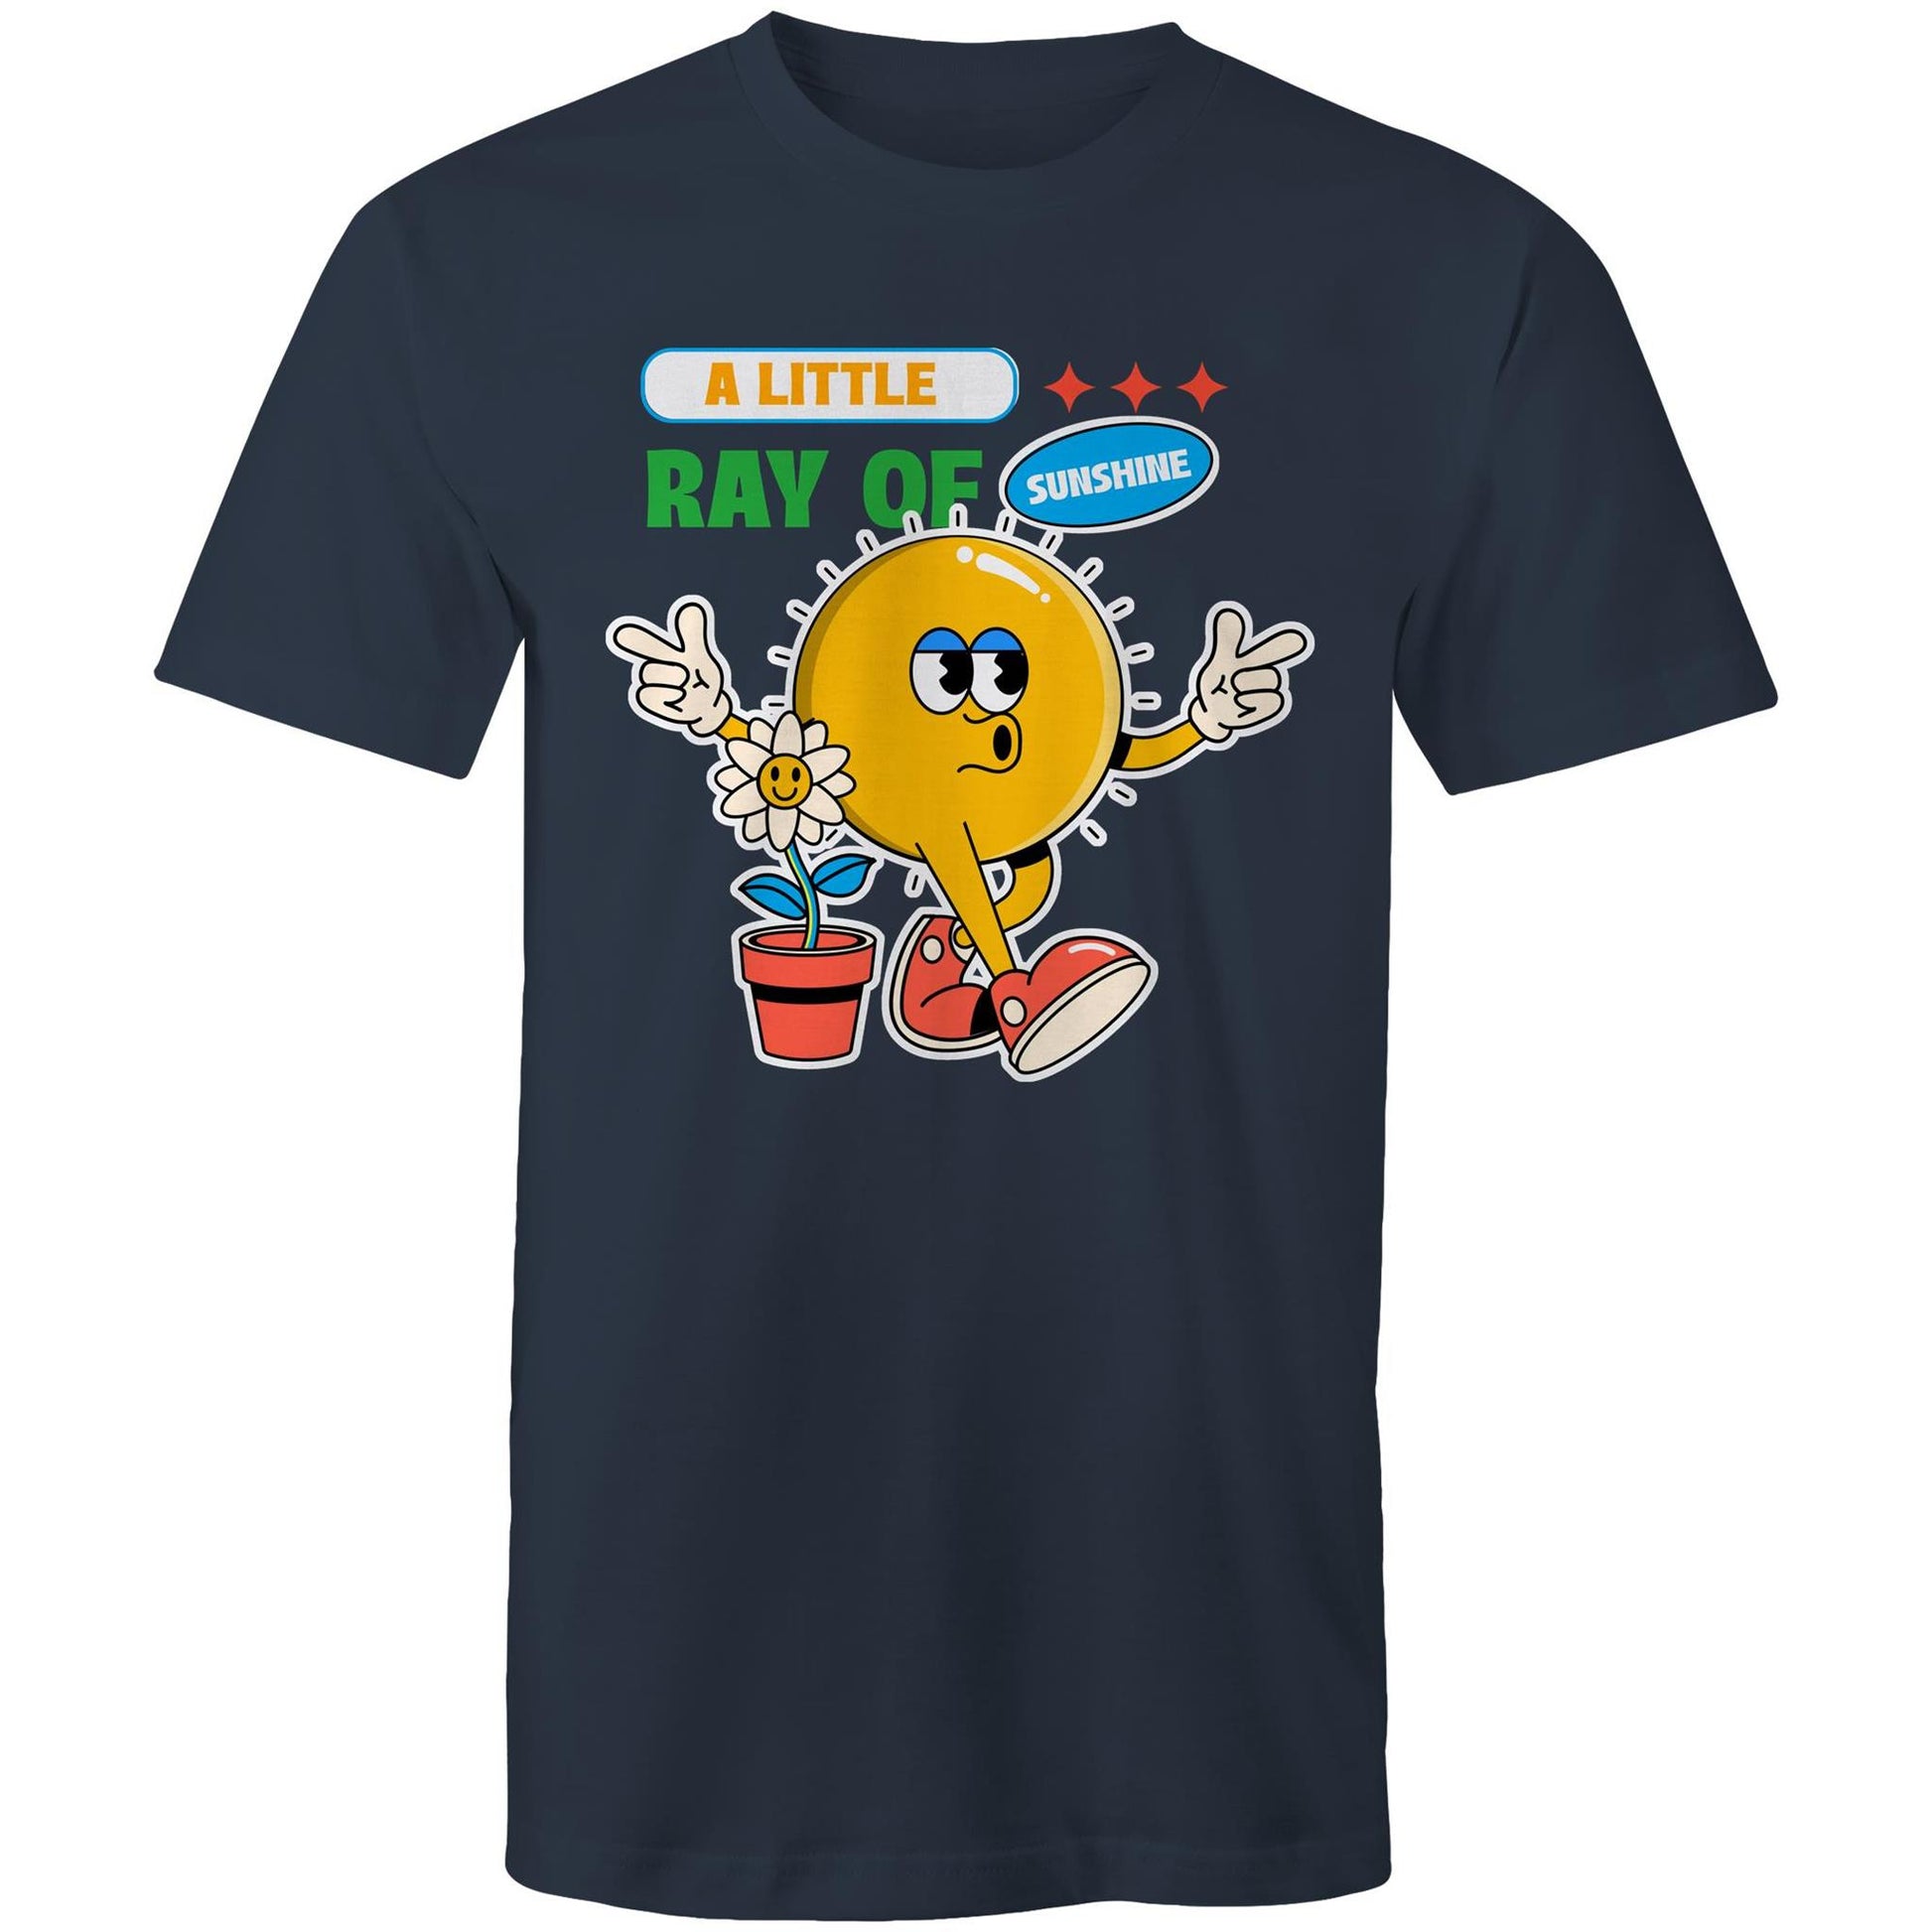 A Little Ray Of Sunshine - Mens T-Shirt Navy Mens T-shirt Retro Summer